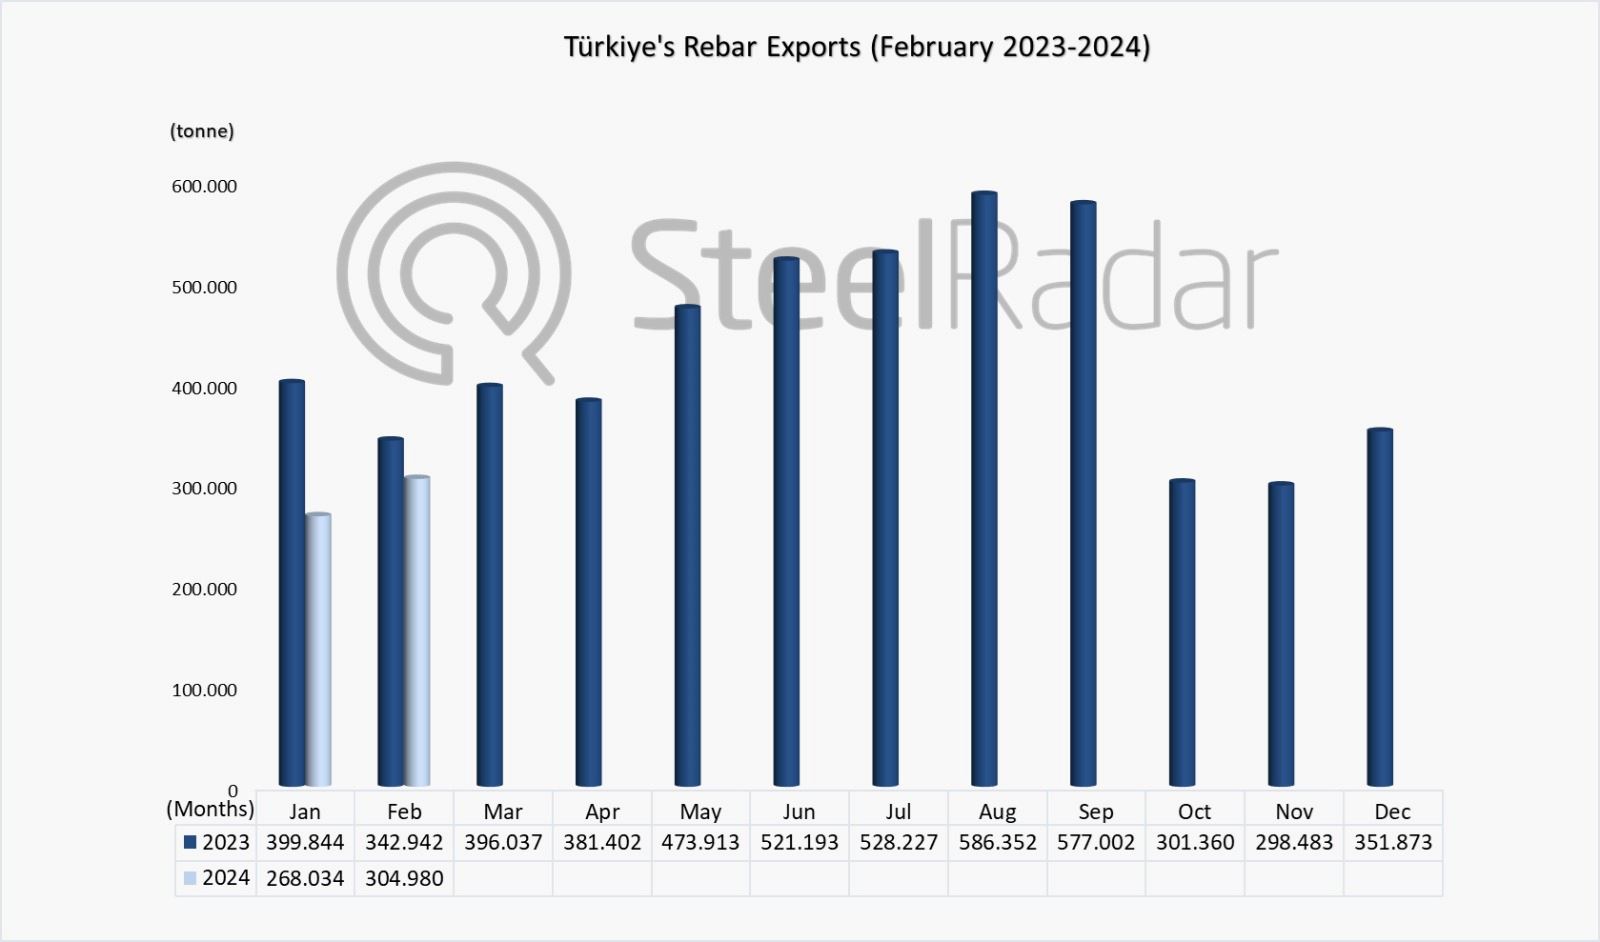 Rebar exports of Türkiye decreased by 11.1% in February